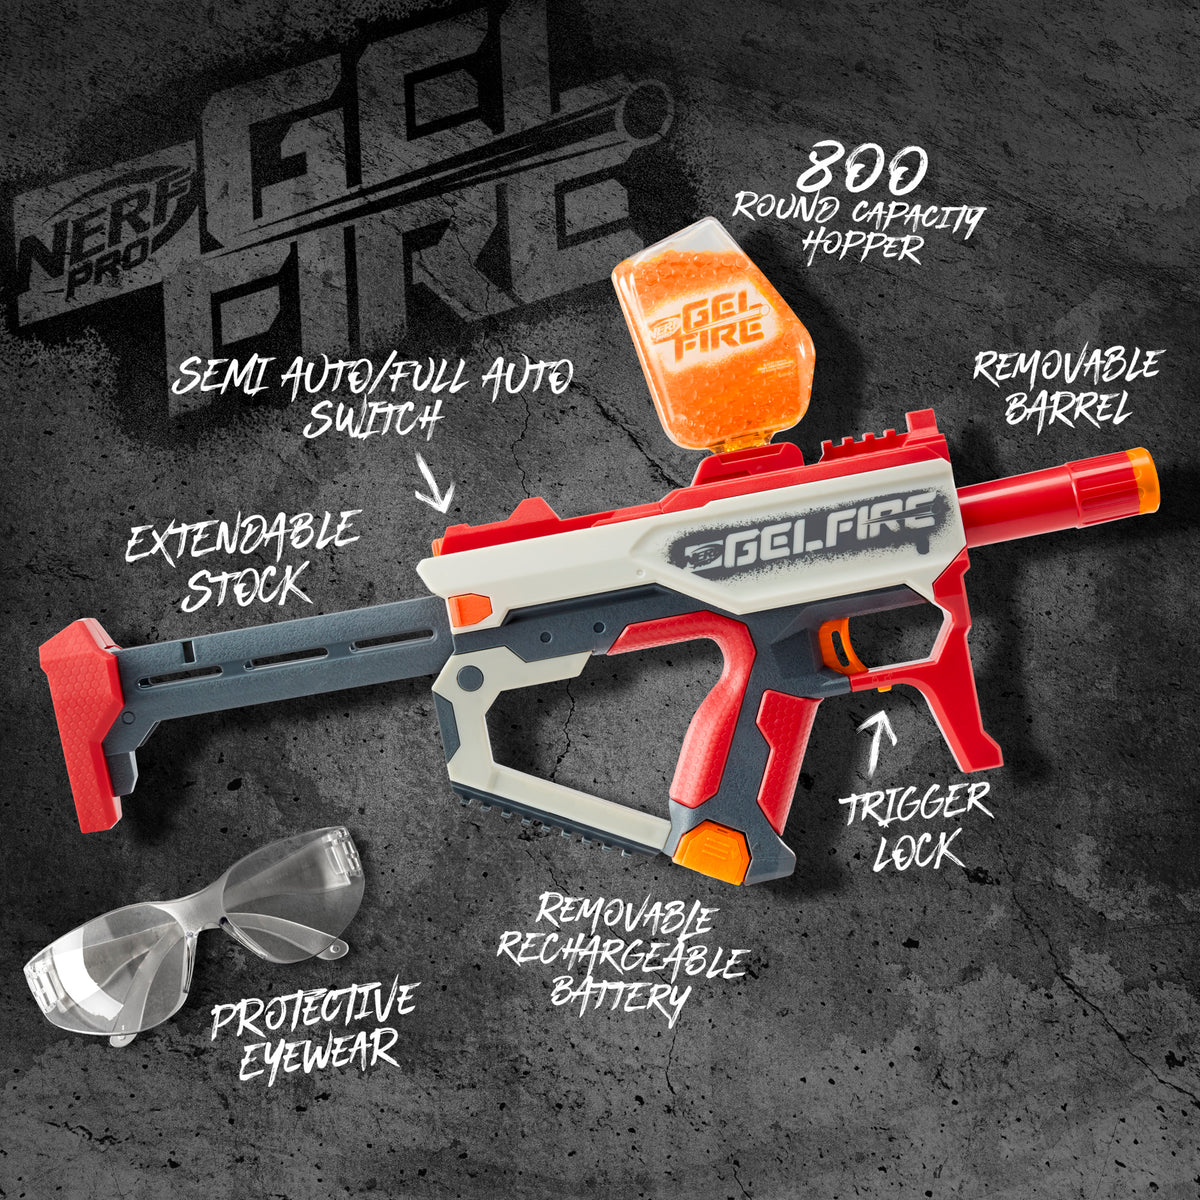 Nerf Pro Gelfire Mythic Blaster, 1 ct - City Market